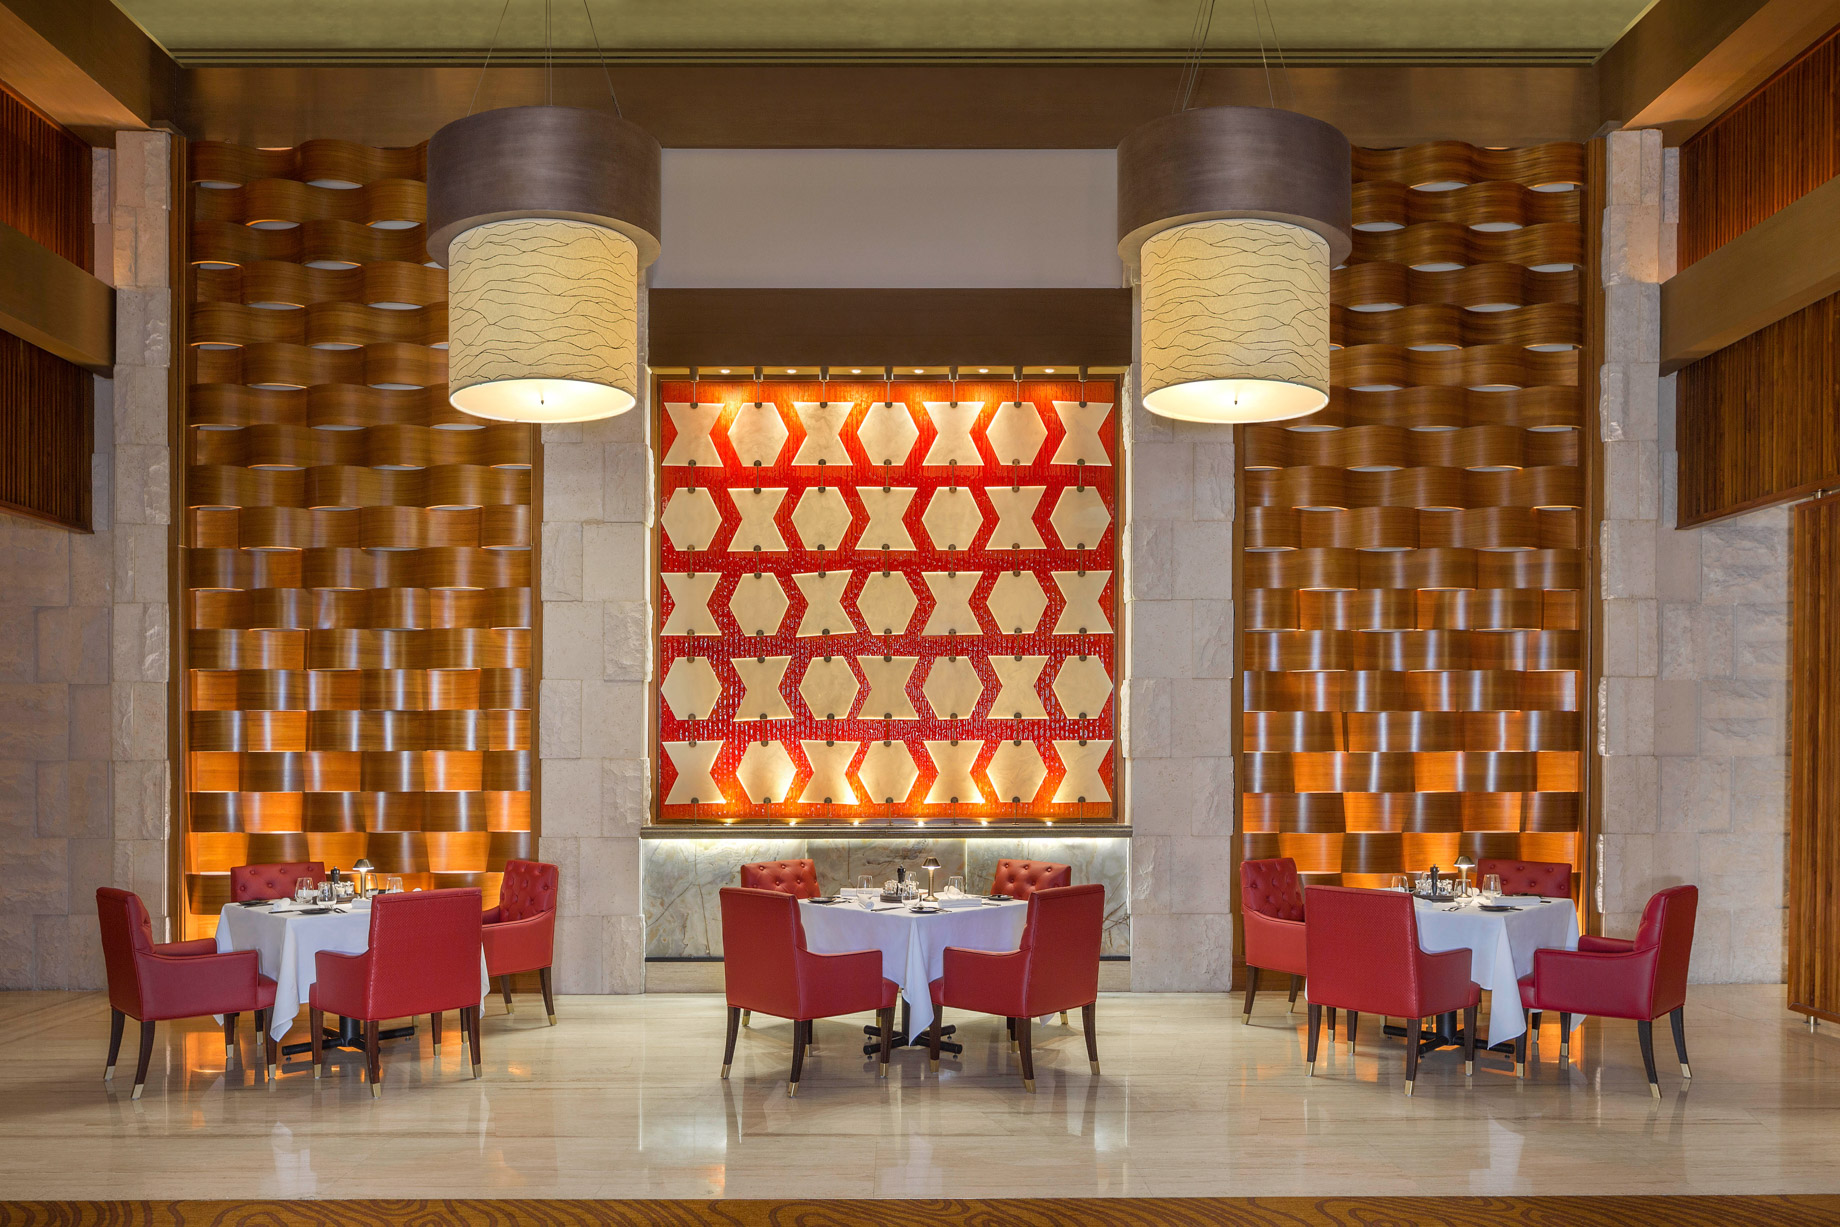 Atlantis The Palm Resort – Crescent Rd, Dubai, UAE – Seafire Steakhouse and Bar